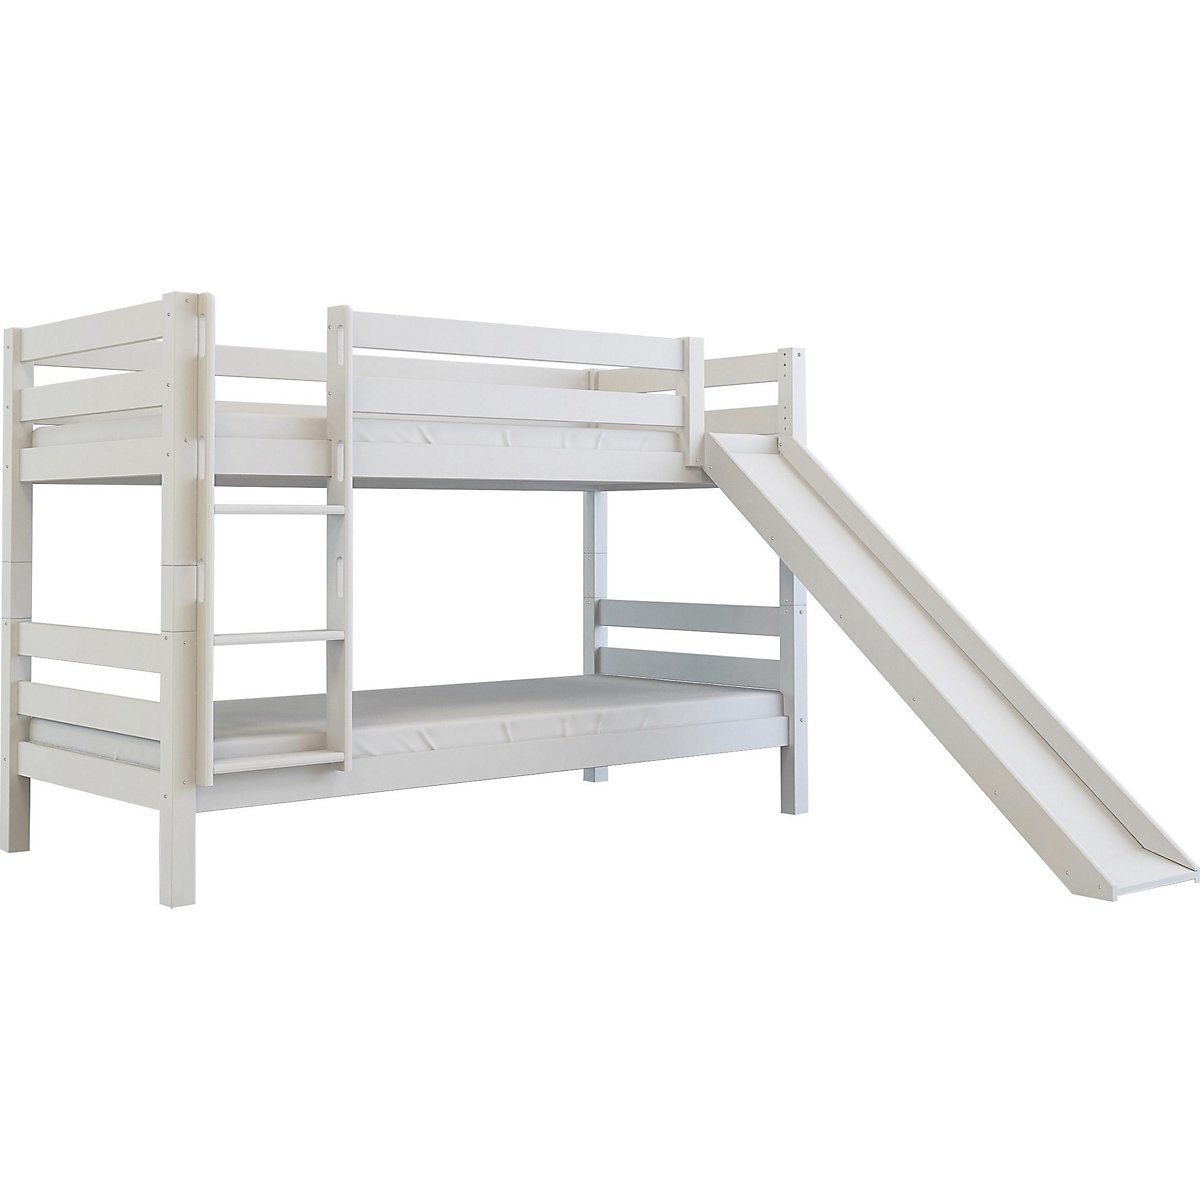 Polini-kids Etagenbett Kinderbett MARK 200x90 cm mit Rutsche Buchenholz massiv weiß